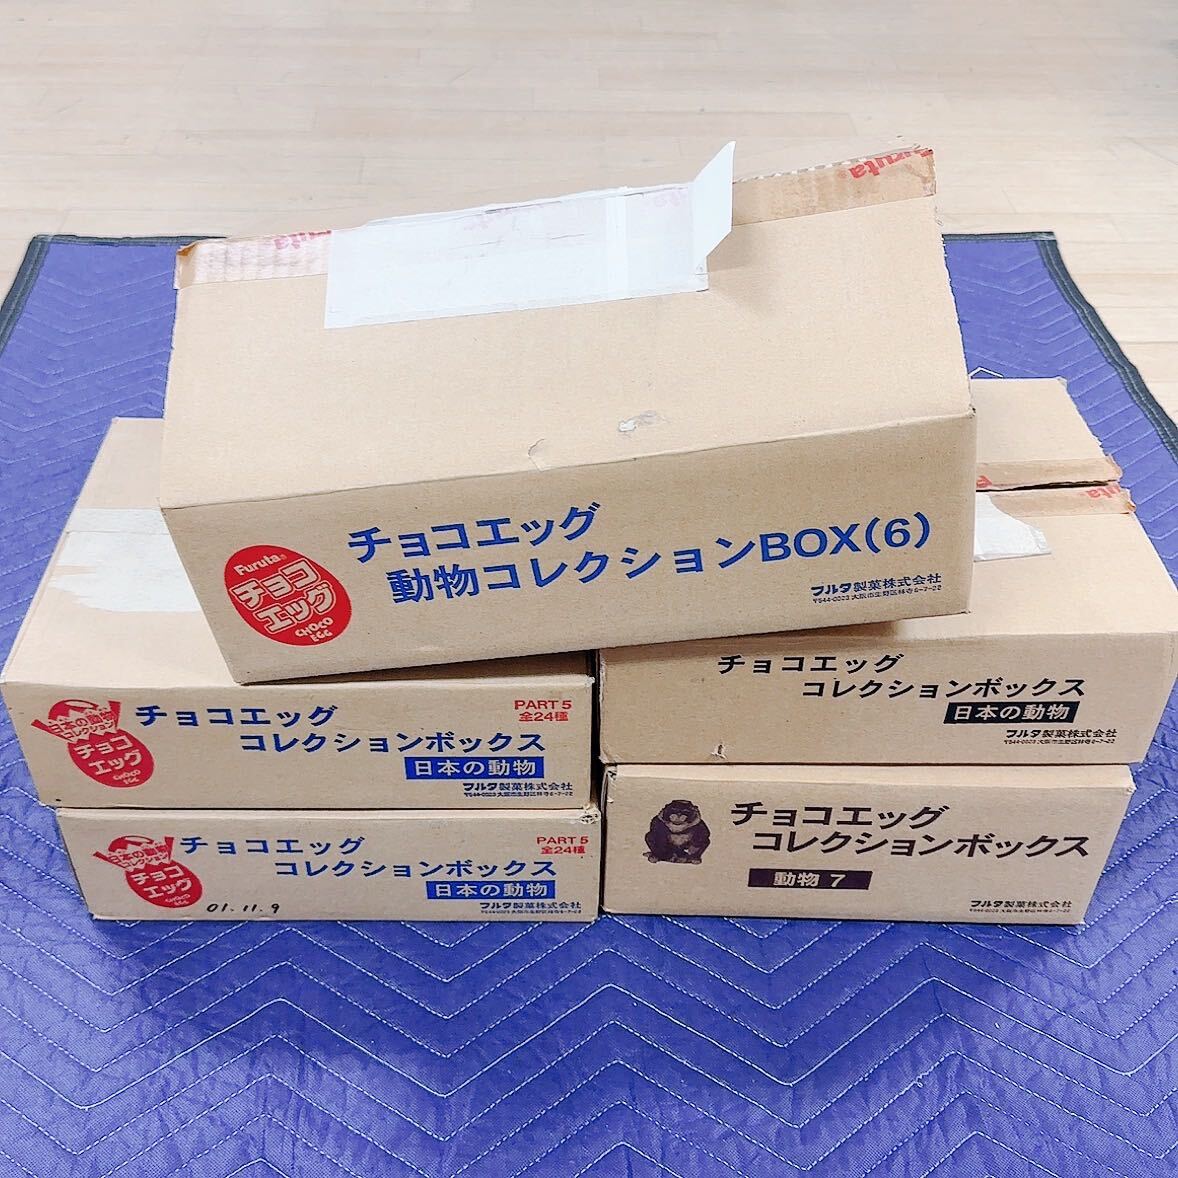 【A2】まとめ売り チョコエッグ コレクションボックス 日本の動物 PART5 PART4 おもしろ動物編 第7弾 第6弾 チョコQ フルタ 海洋堂 大量_画像6